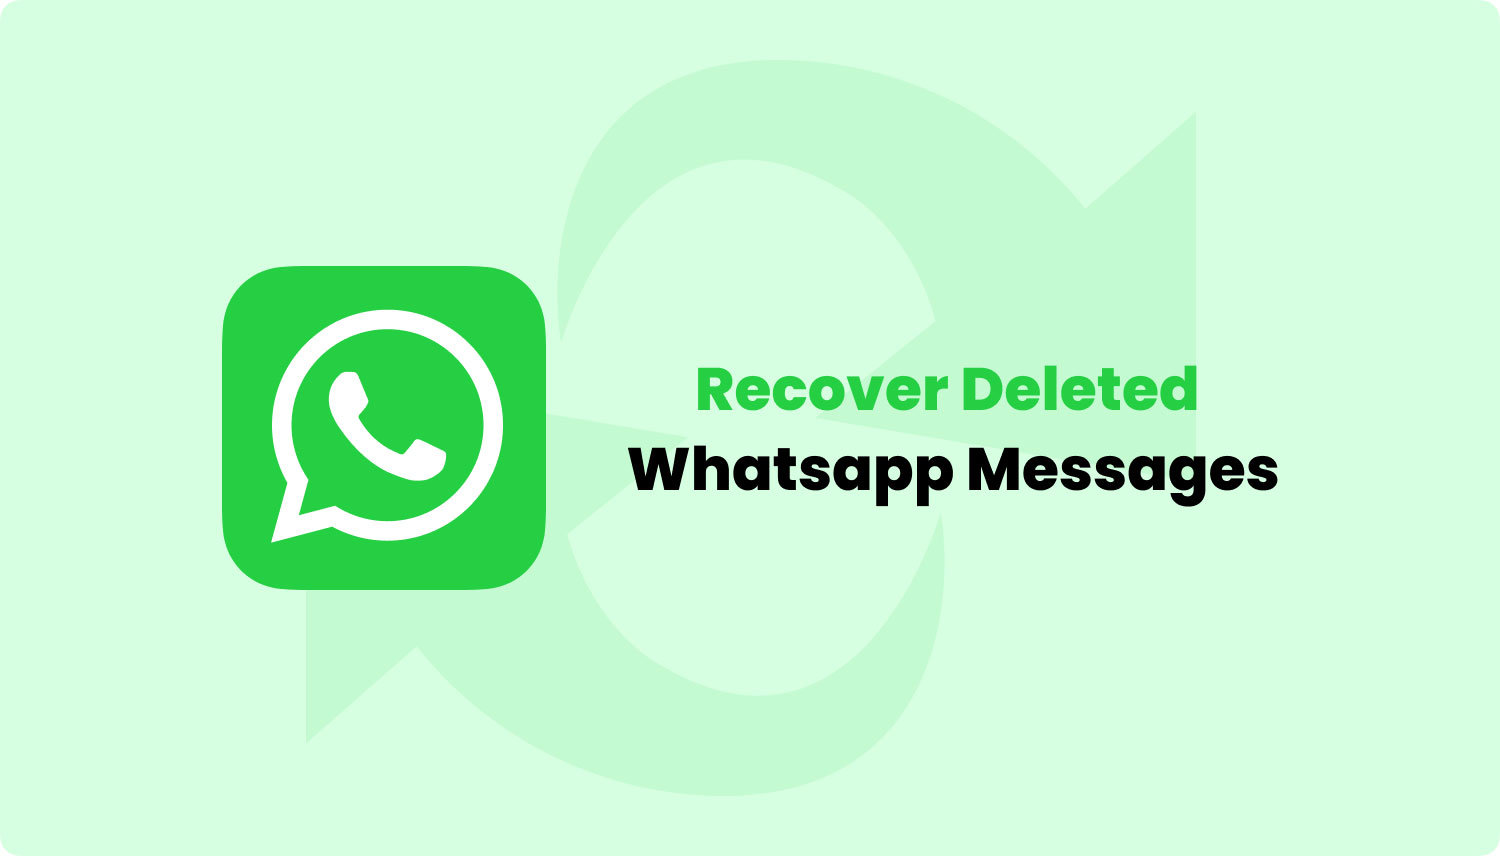 Razone de la pérdida de mensajes de WhatsApp